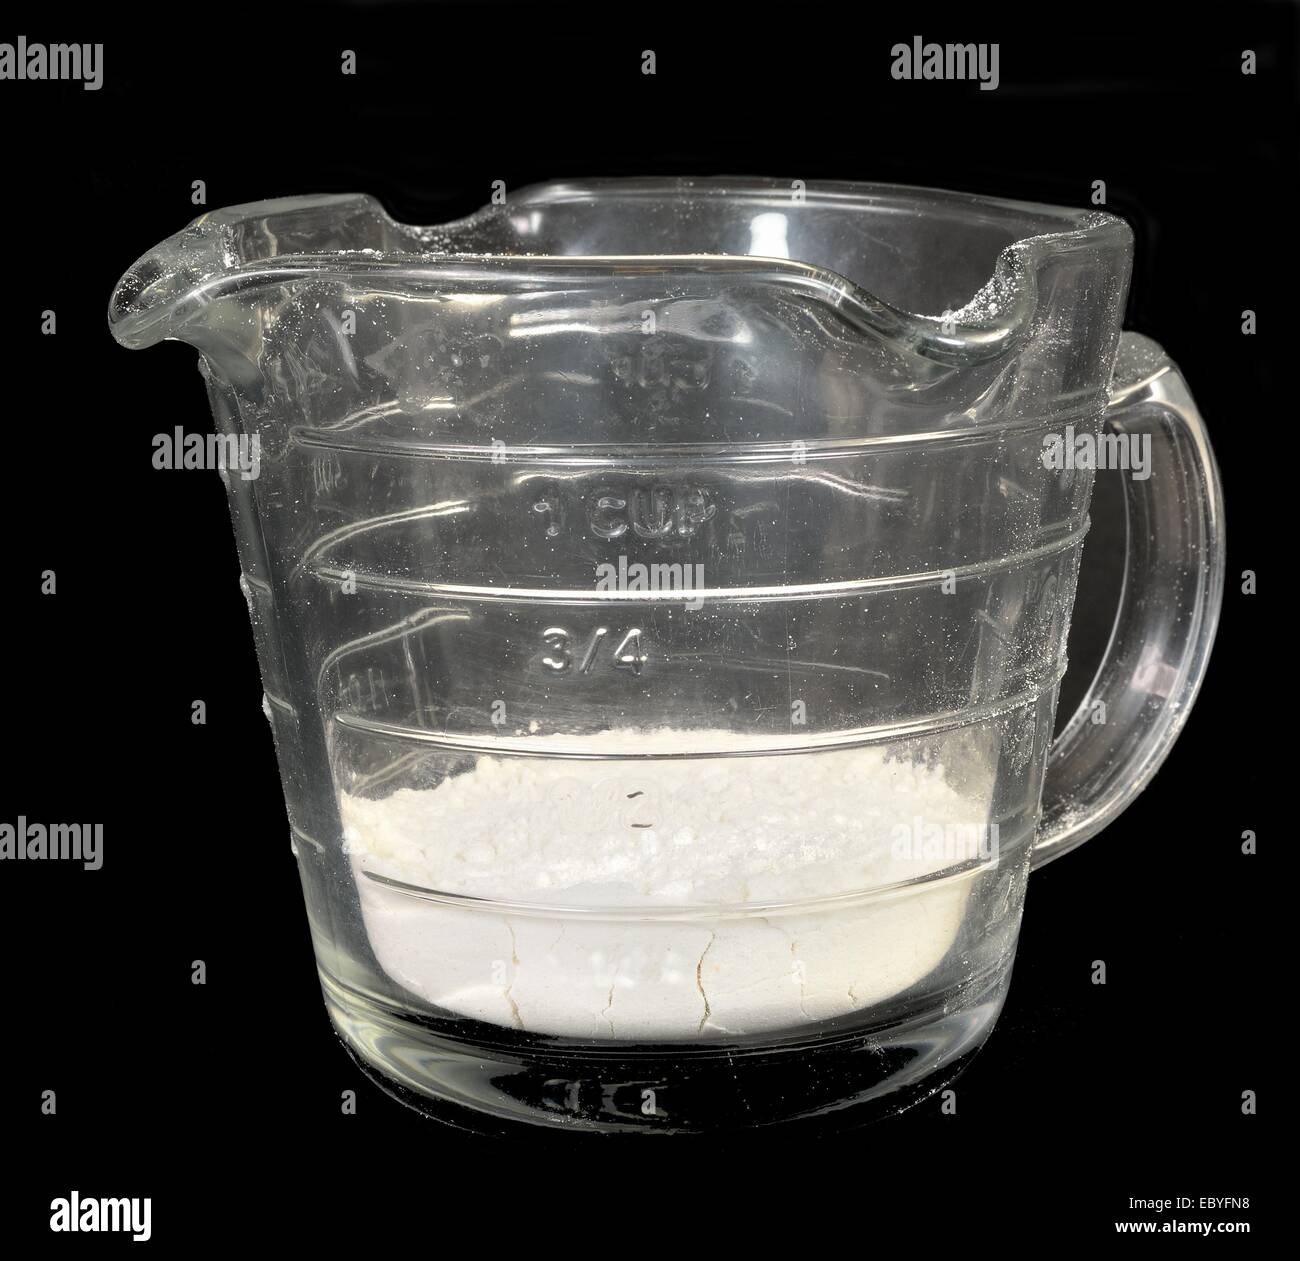 https://c8.alamy.com/comp/EBYFN8/measuring-cup-quarter-filled-with-flour-on-a-black-background-EBYFN8.jpg